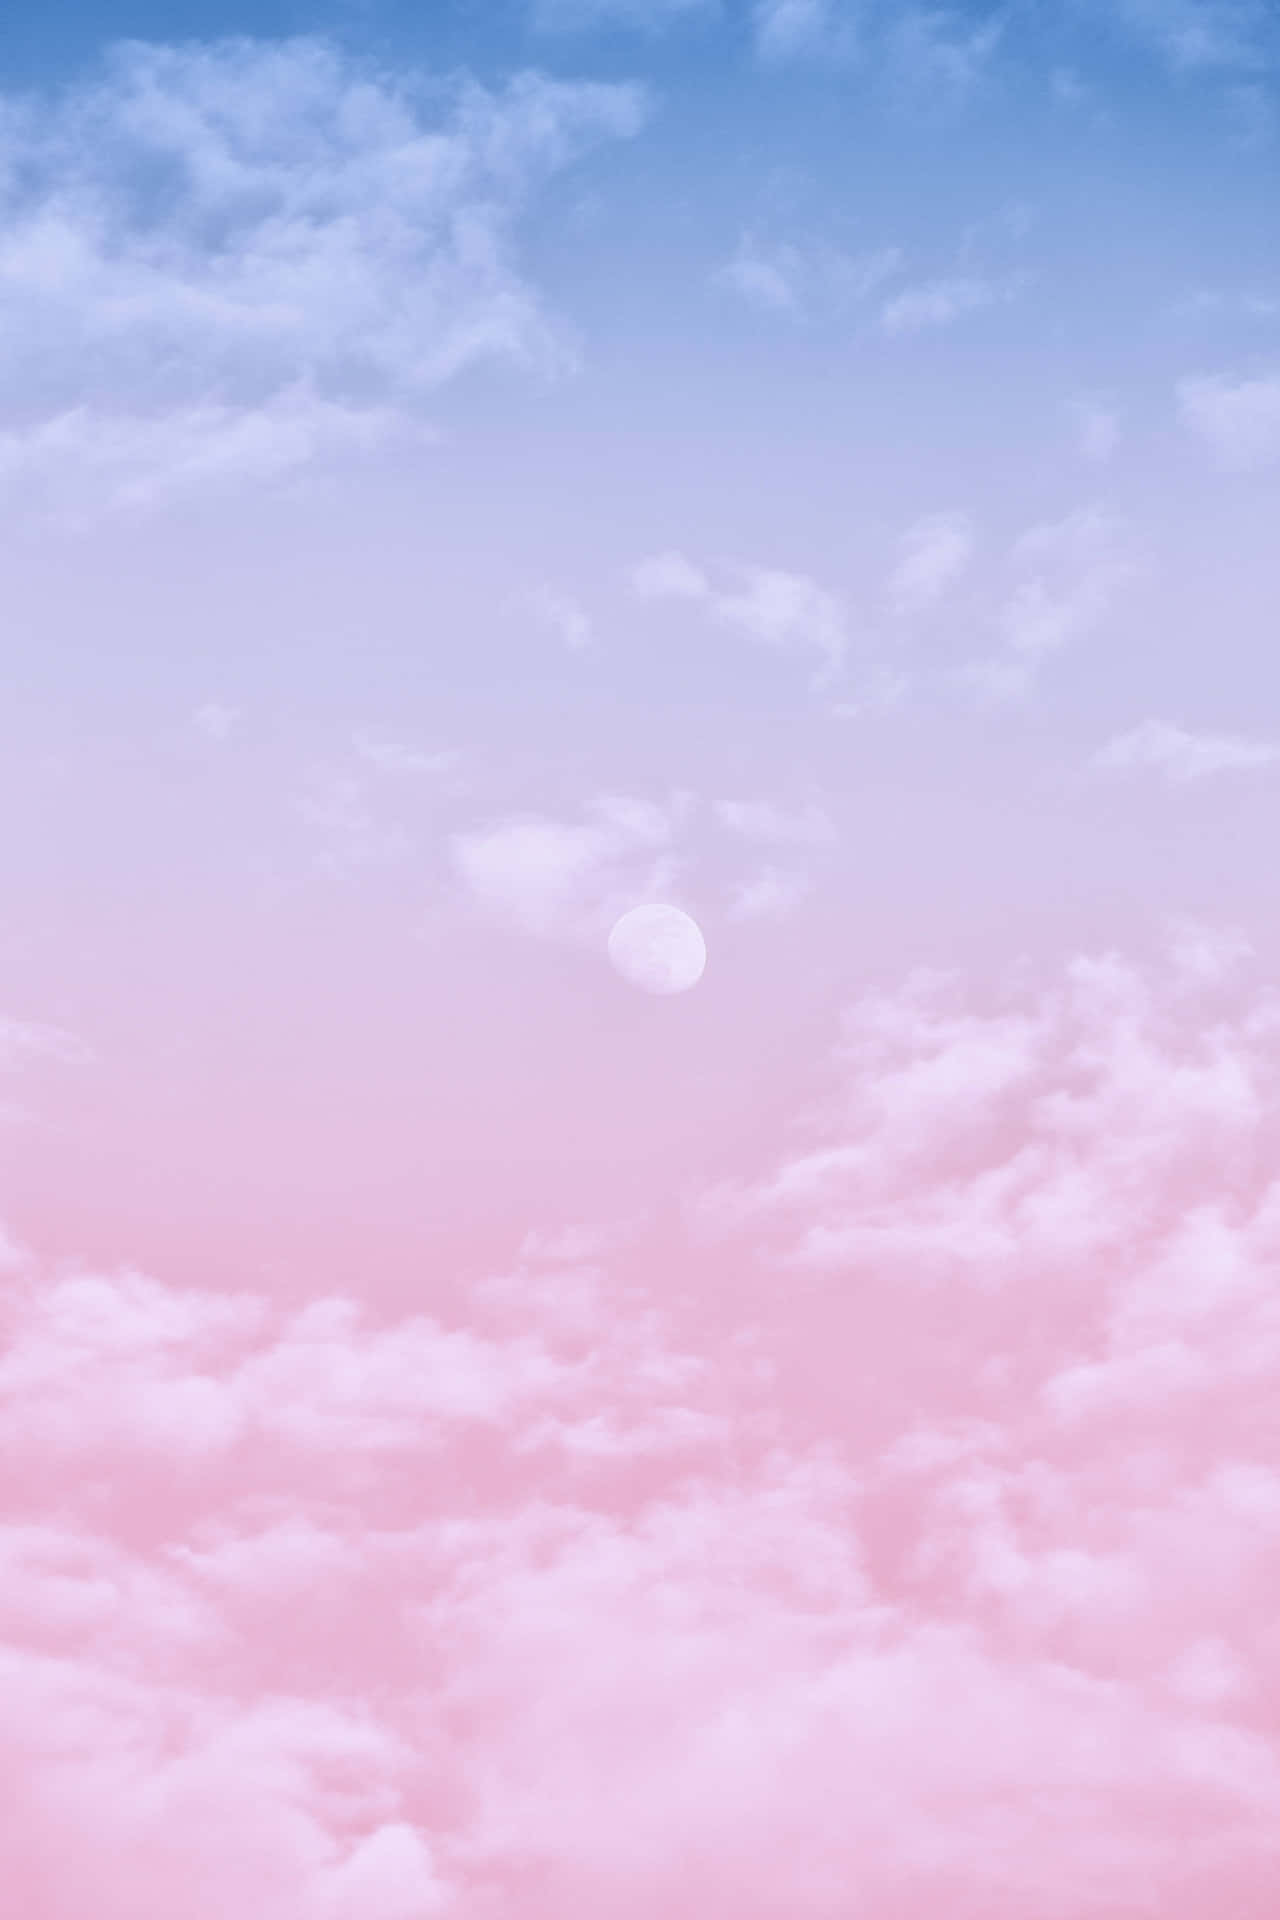 Aesthetic Pink Cloud HD Wallpapers Free download  PixelsTalkNet